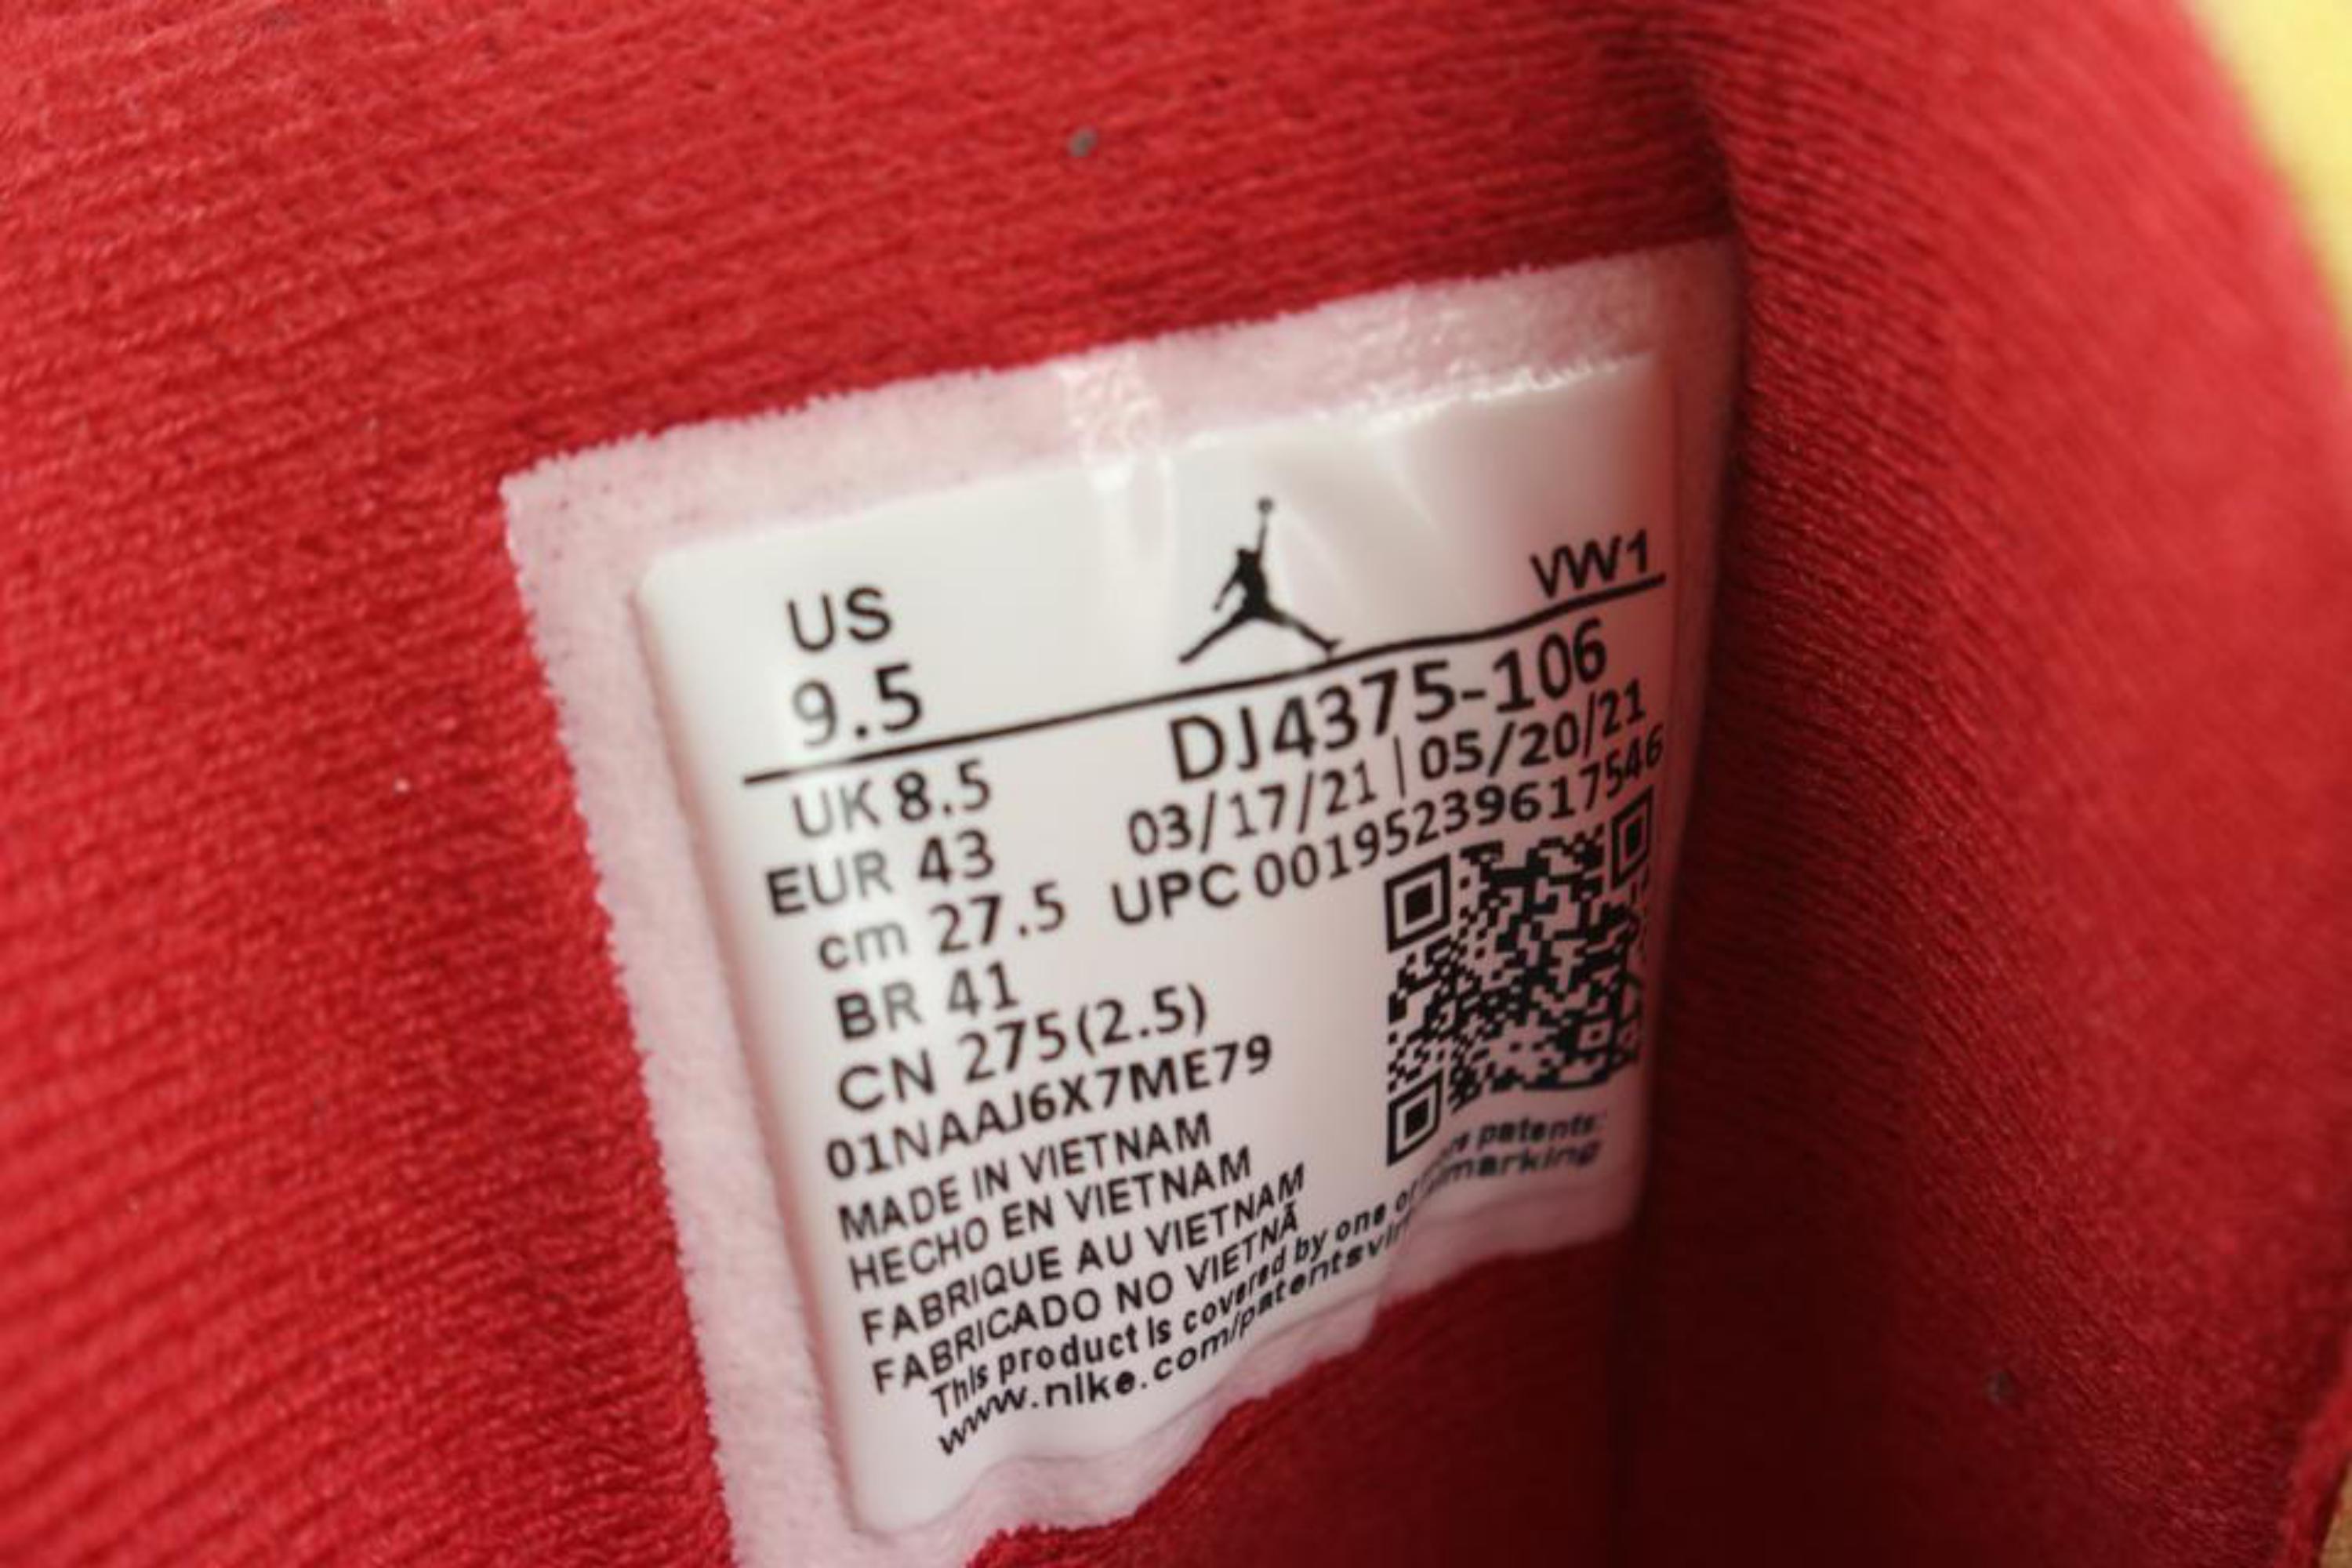 Off-White x Nike Men's 9.5 US Virgil Abloh Off-White RedAir Jordan 2 II Low dj4375-106
Date Code/Serial Number: DJ4375-106
Made In: Vietnam
Measurements: Length:  11.75